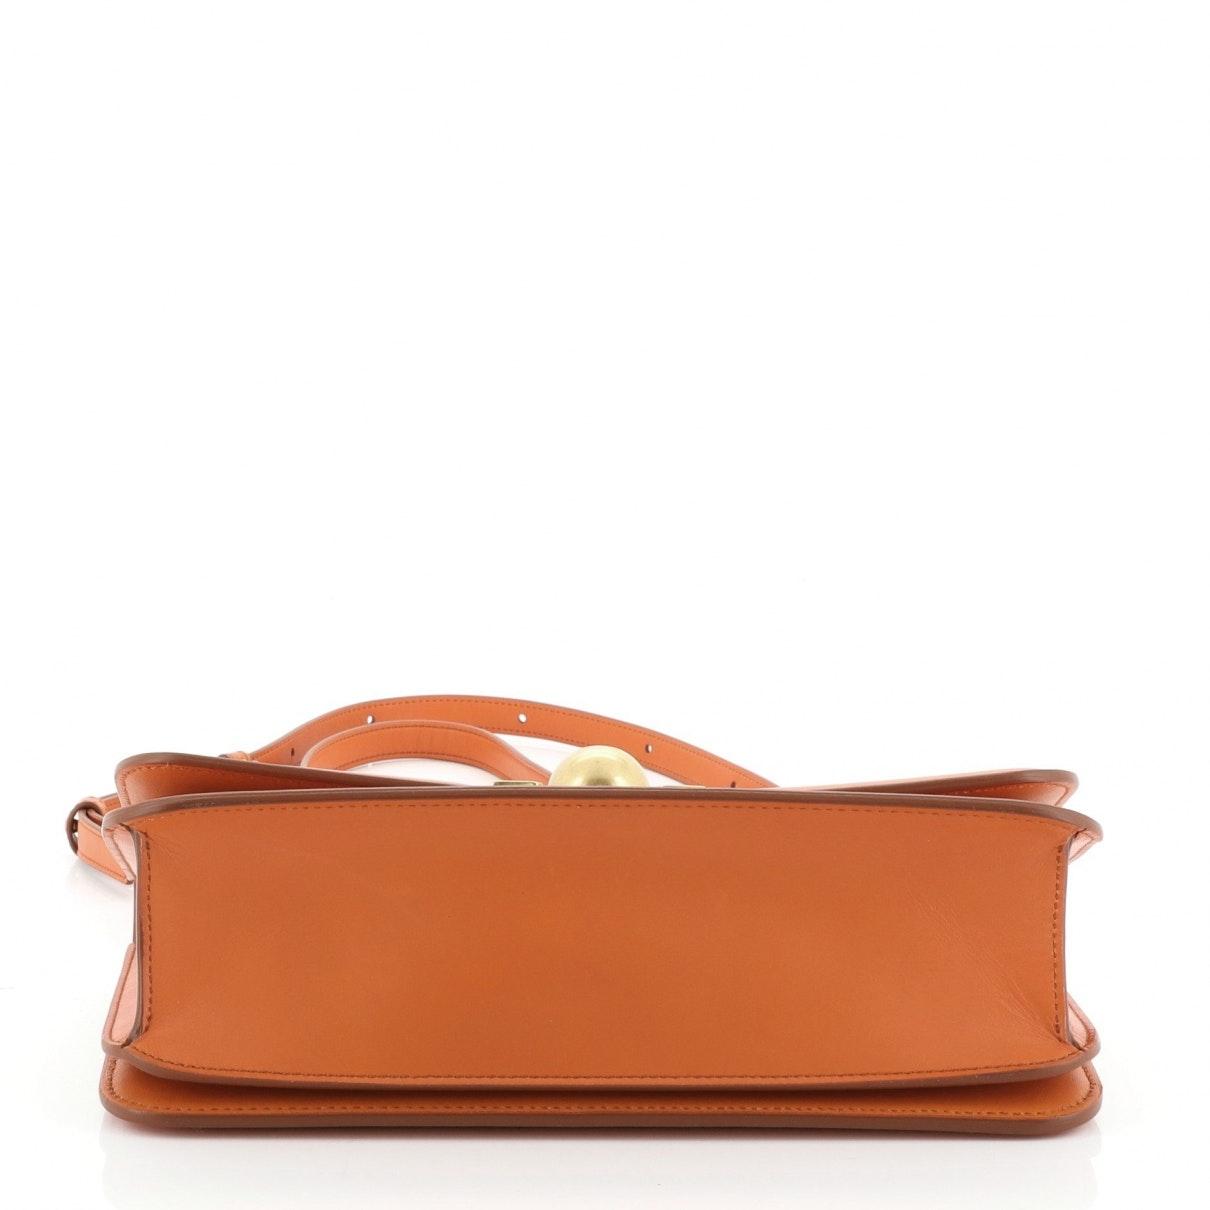 Bottega Veneta Leather Handbag in Orange - Lyst